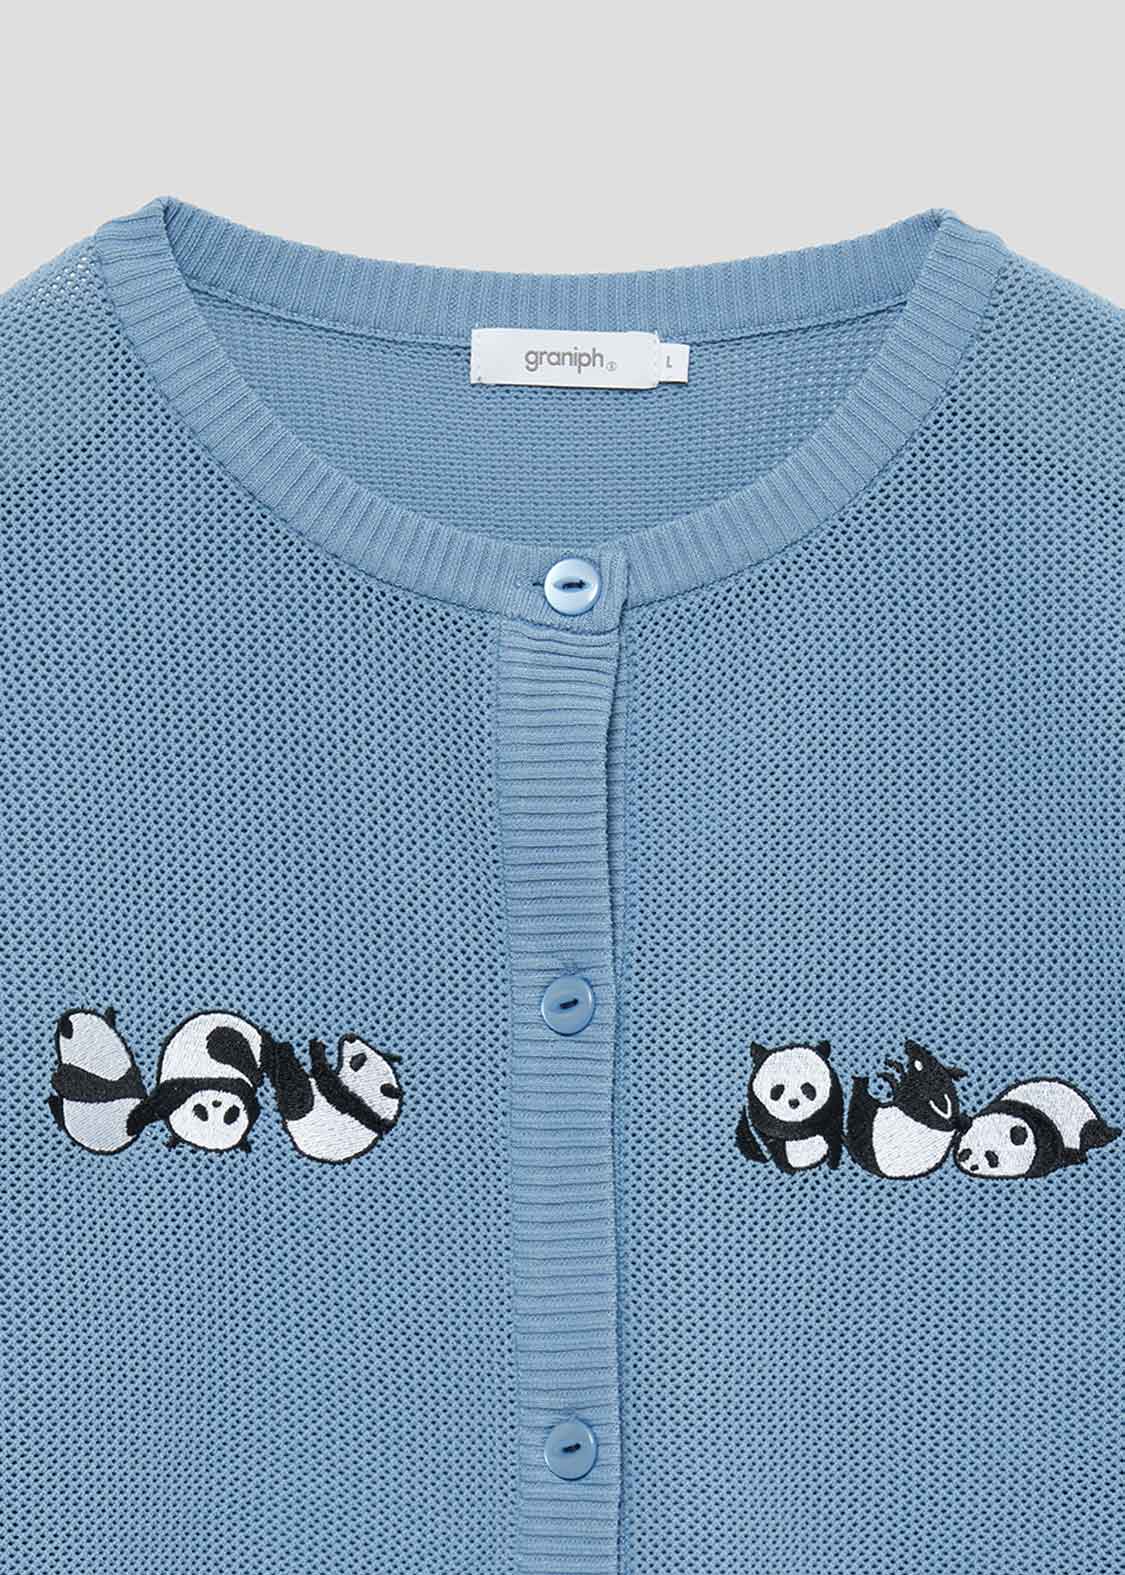 Spondish Long Sleeve Knit Cardigan (Rolling Pandas)